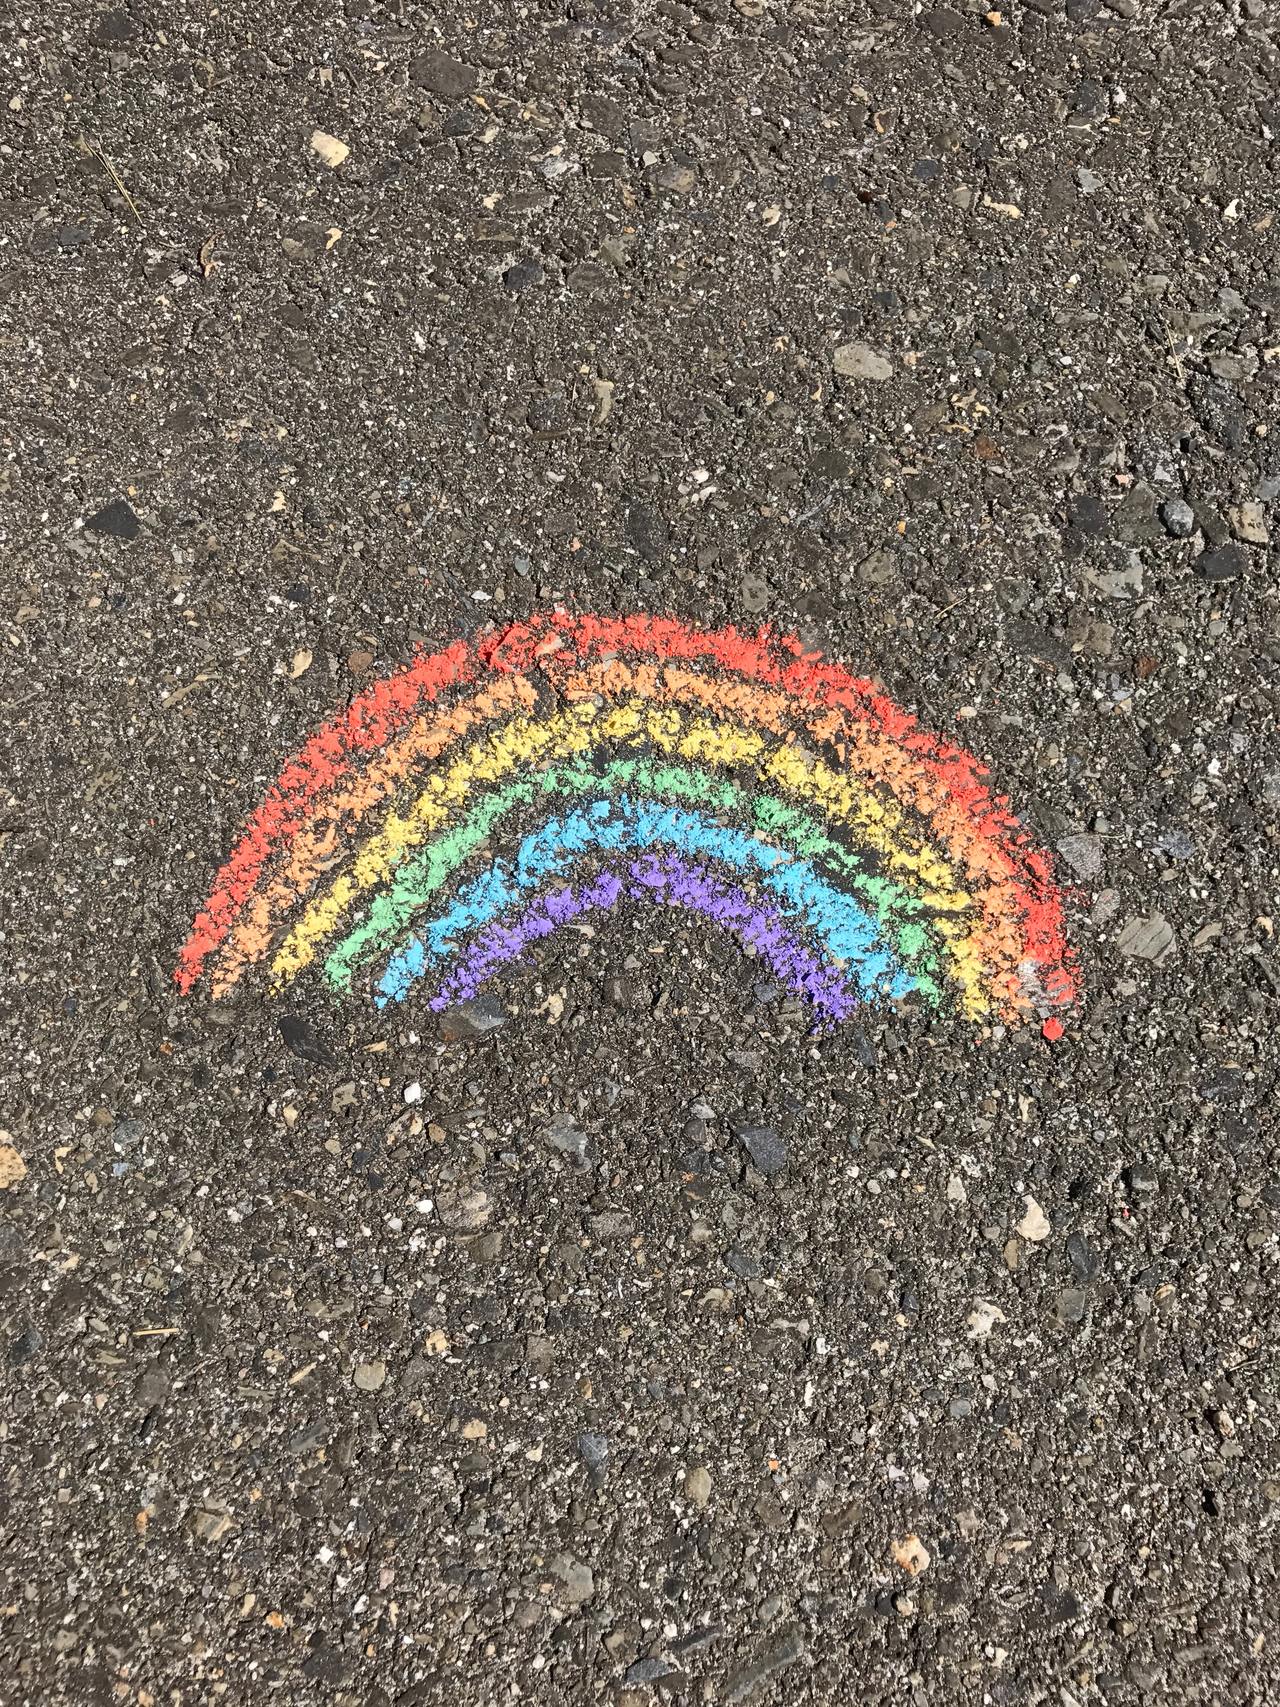 a rainbow drawn on pavement